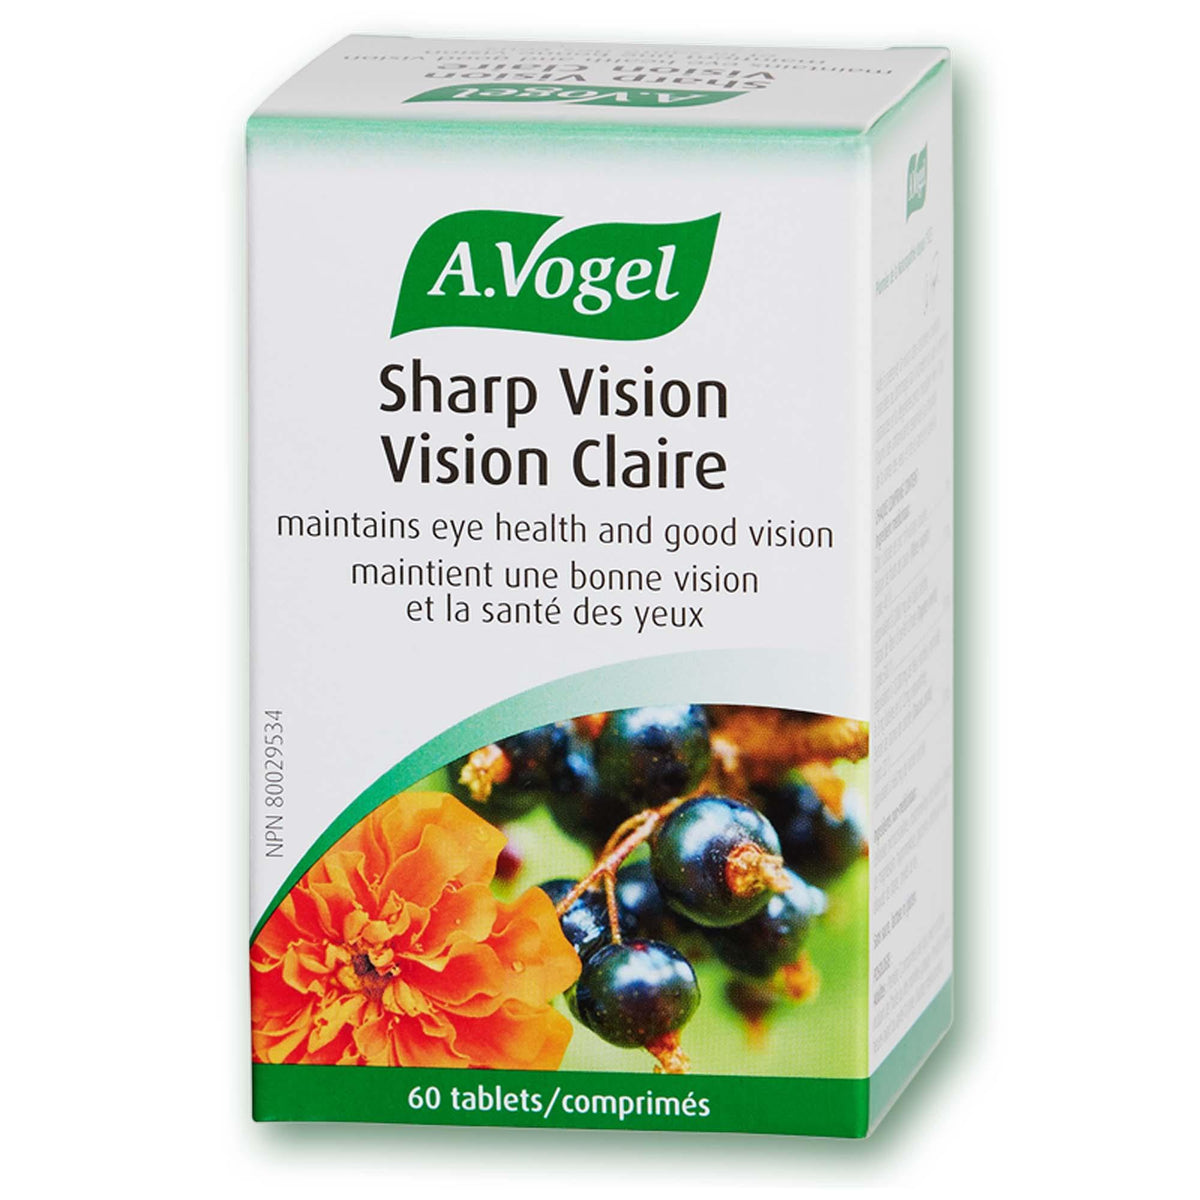 A.Vogel Sharp Vision 60 Tablets Supplements - Eye Health at Village Vitamin Store